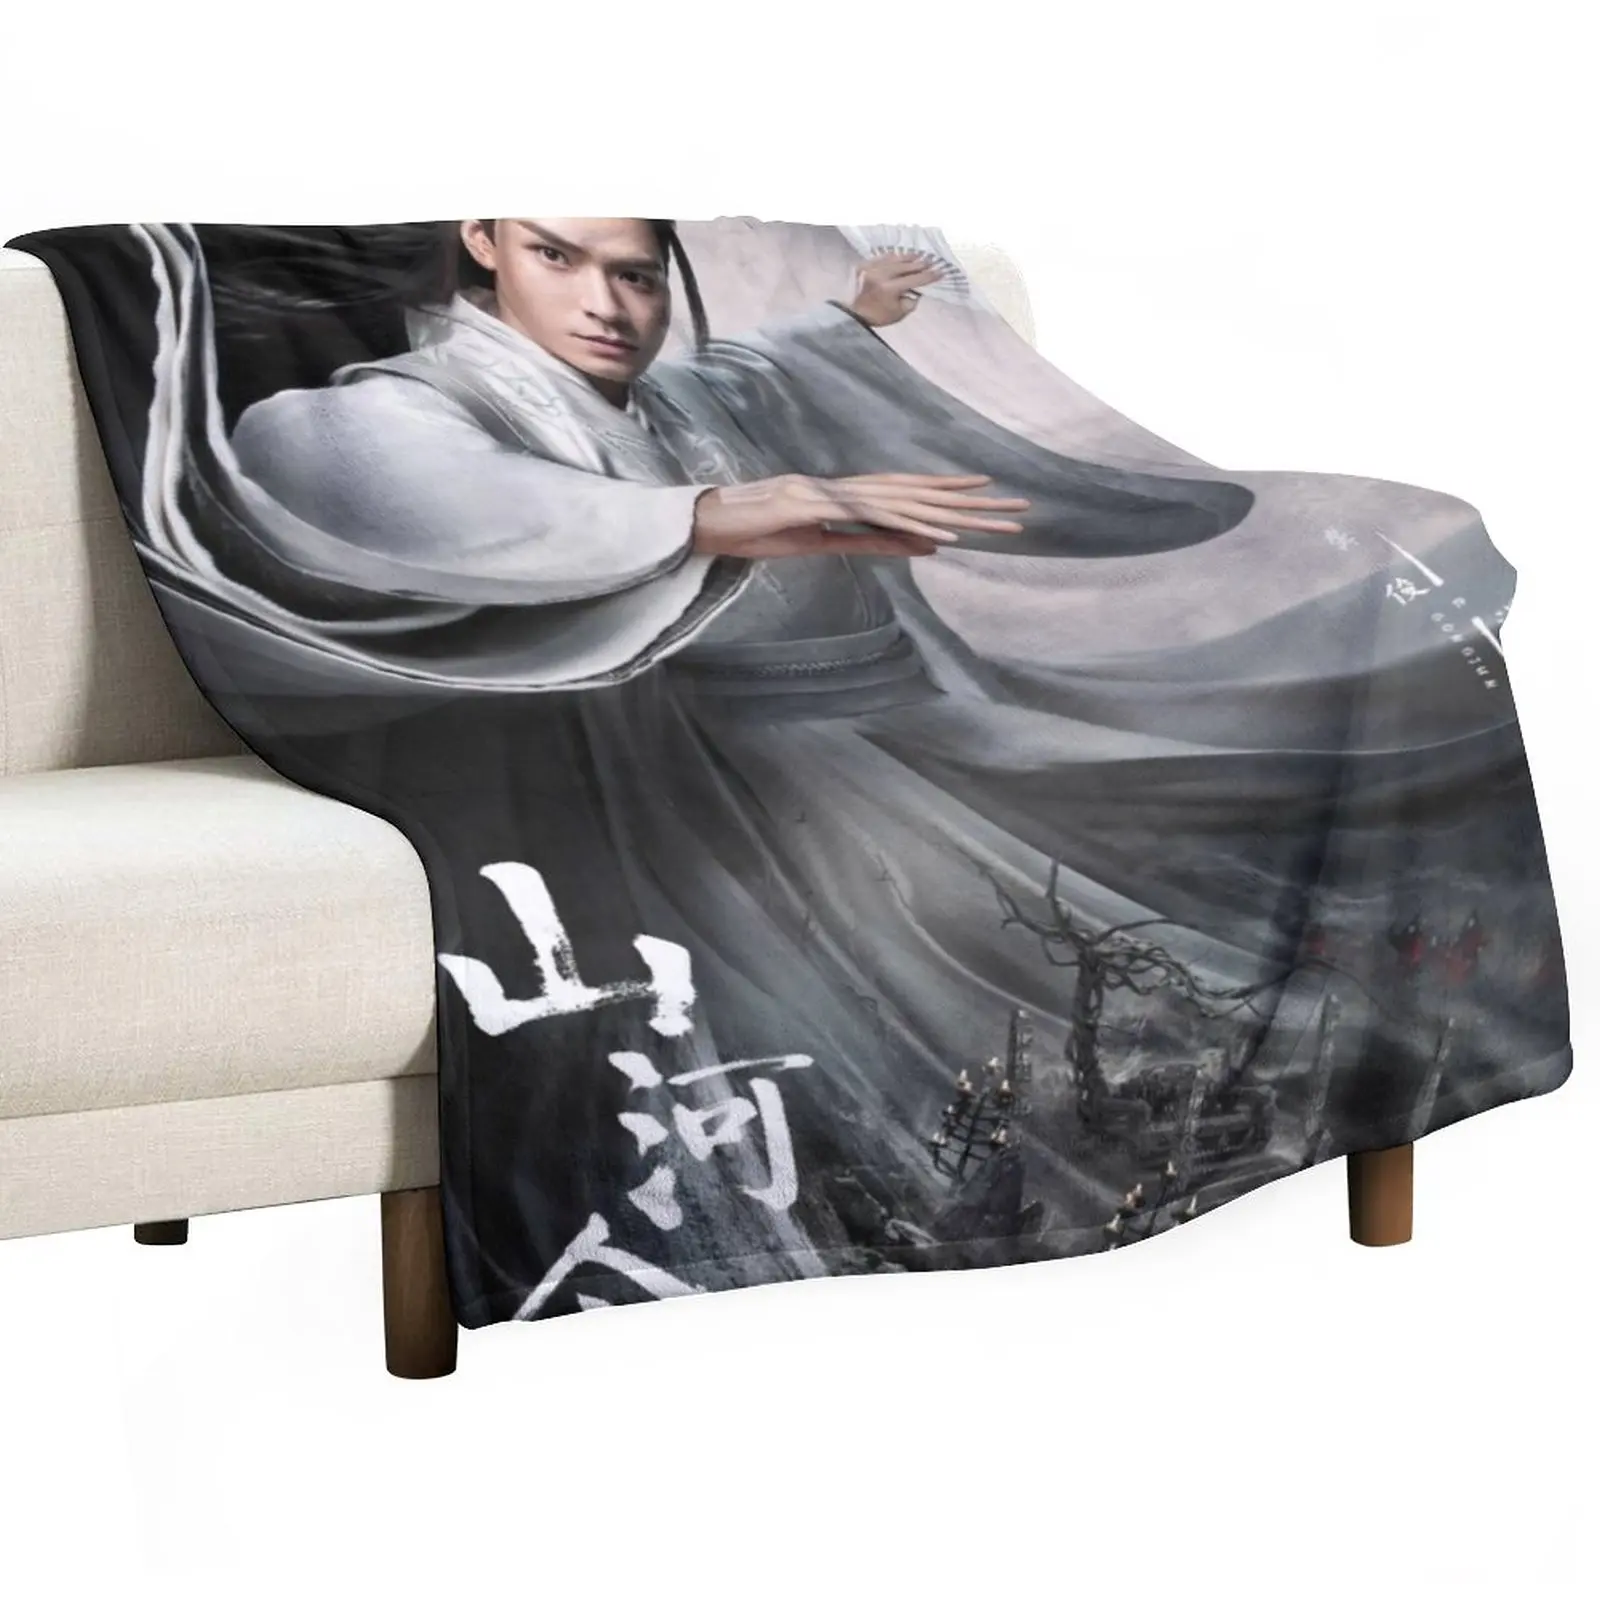 

Wen Ke Xing Throw Blanket Plaid For Sofa Soft Big Blanket